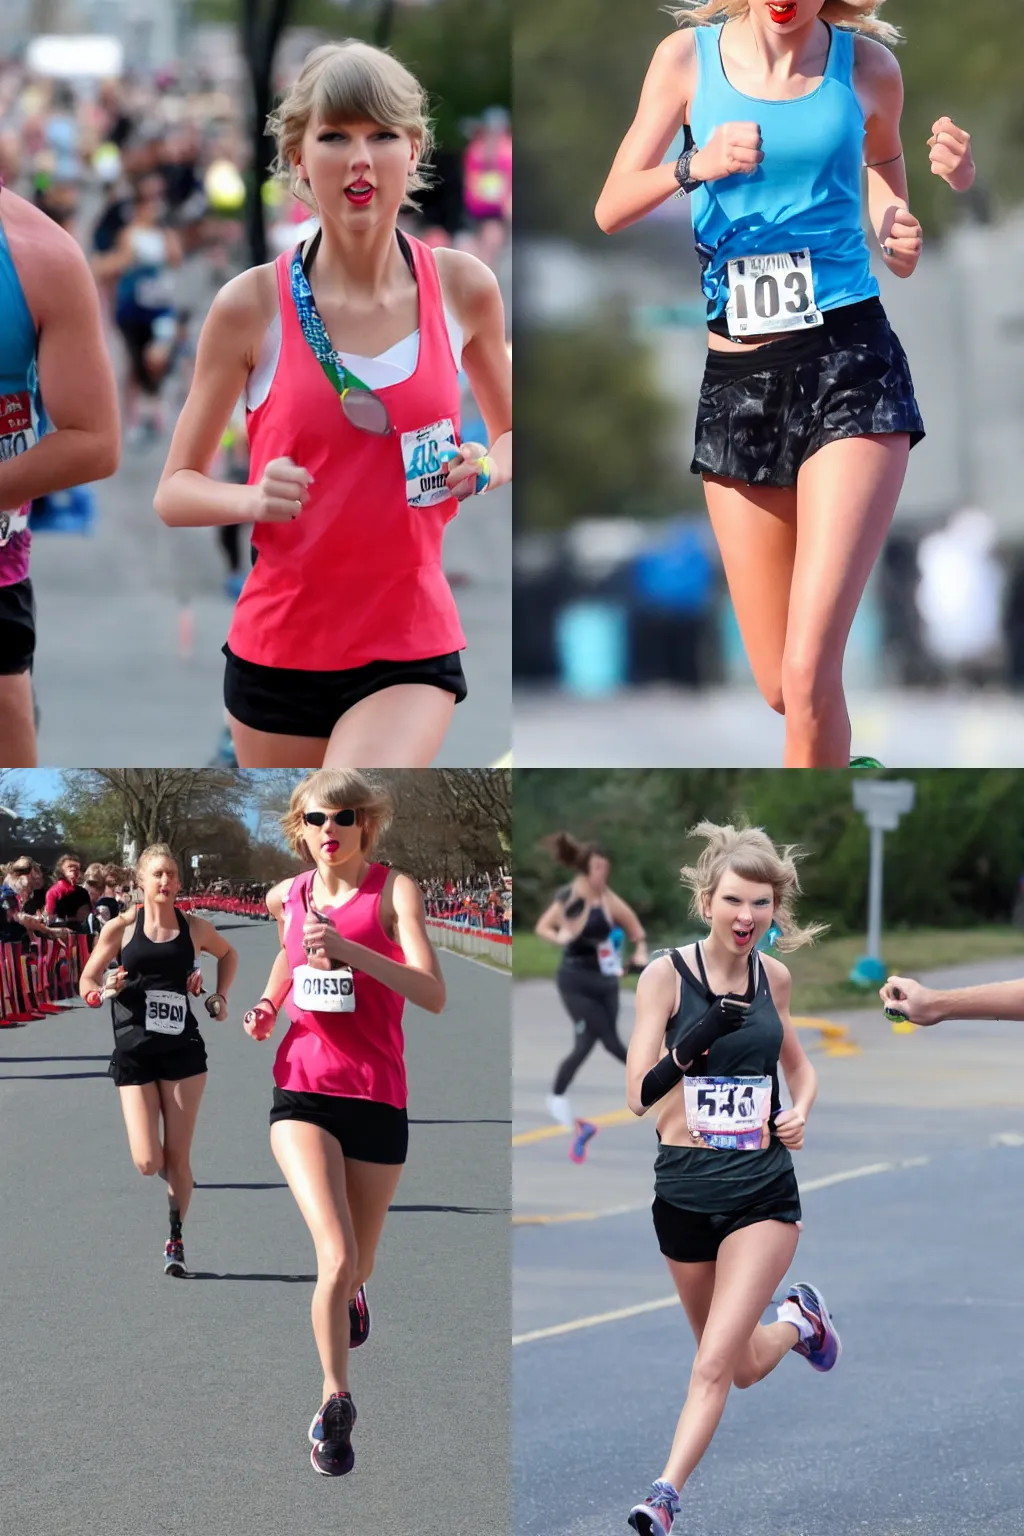 Prompt: close-up photo of Taylor Swift running a marathon